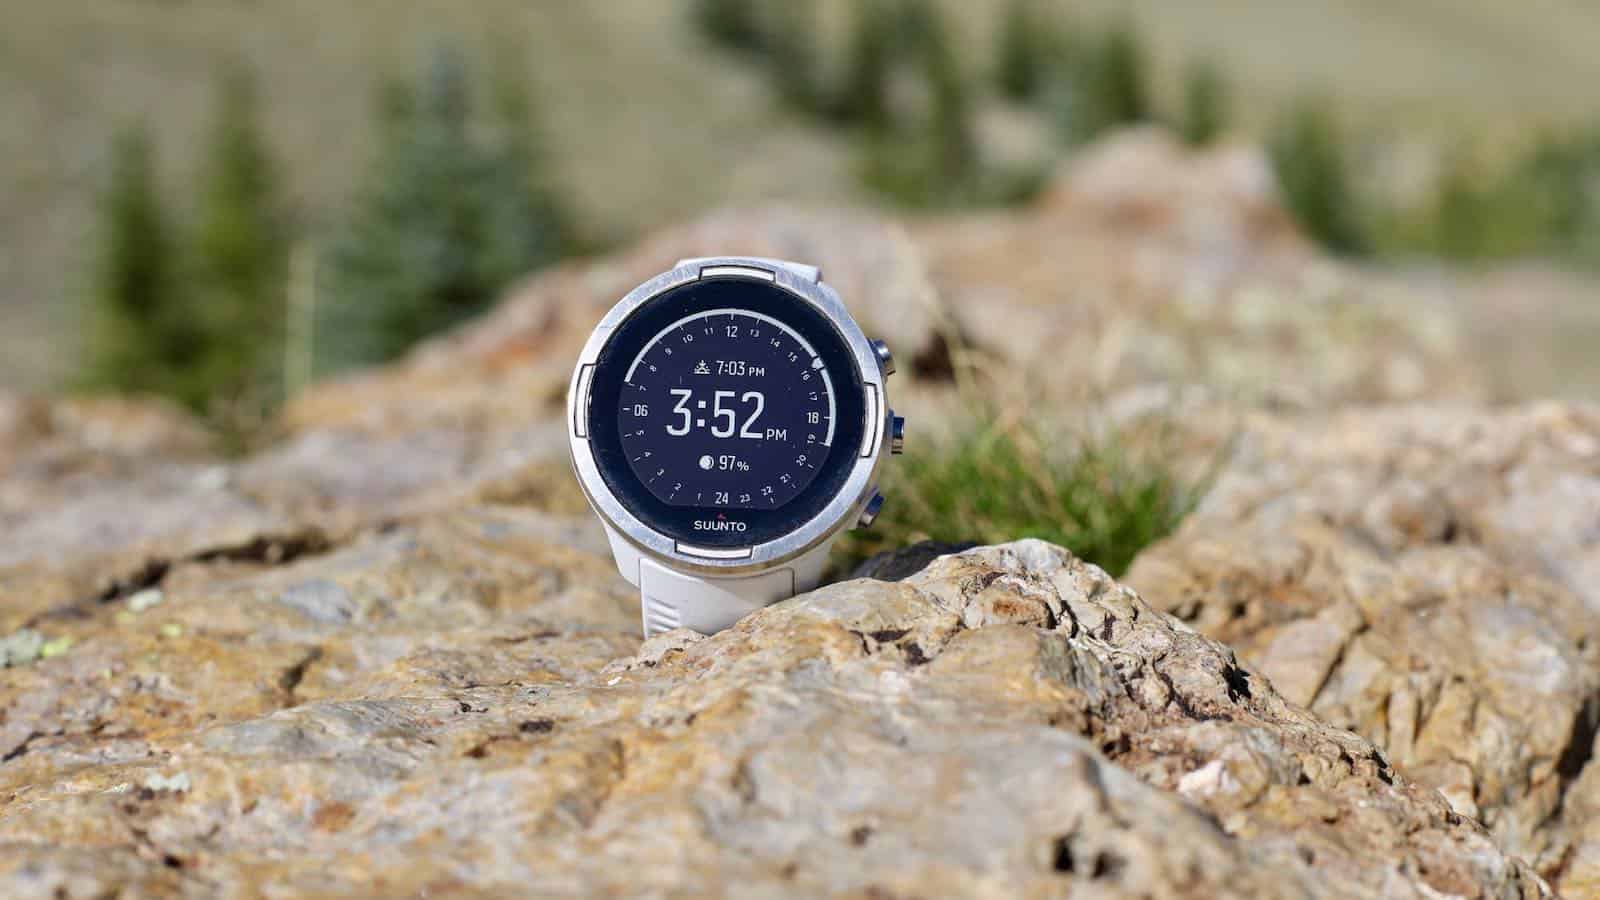 The Suunto 9 Baro Endurance GPS Watch